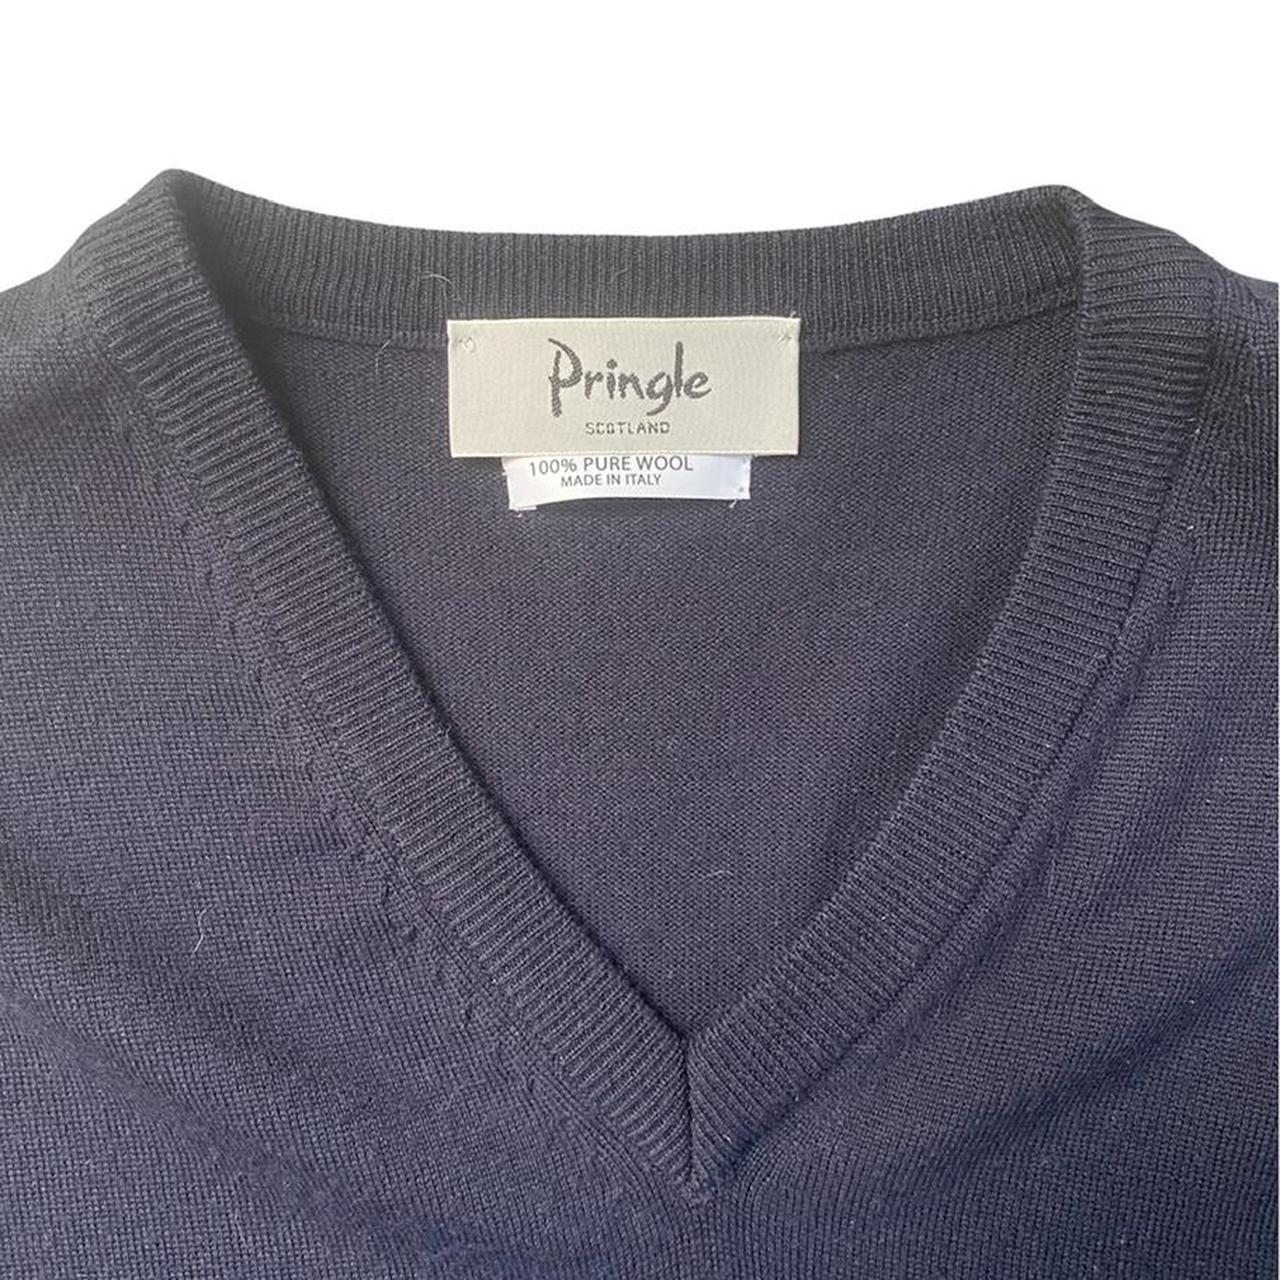 Product Image 3 - 100% wool Sweater vest. Black